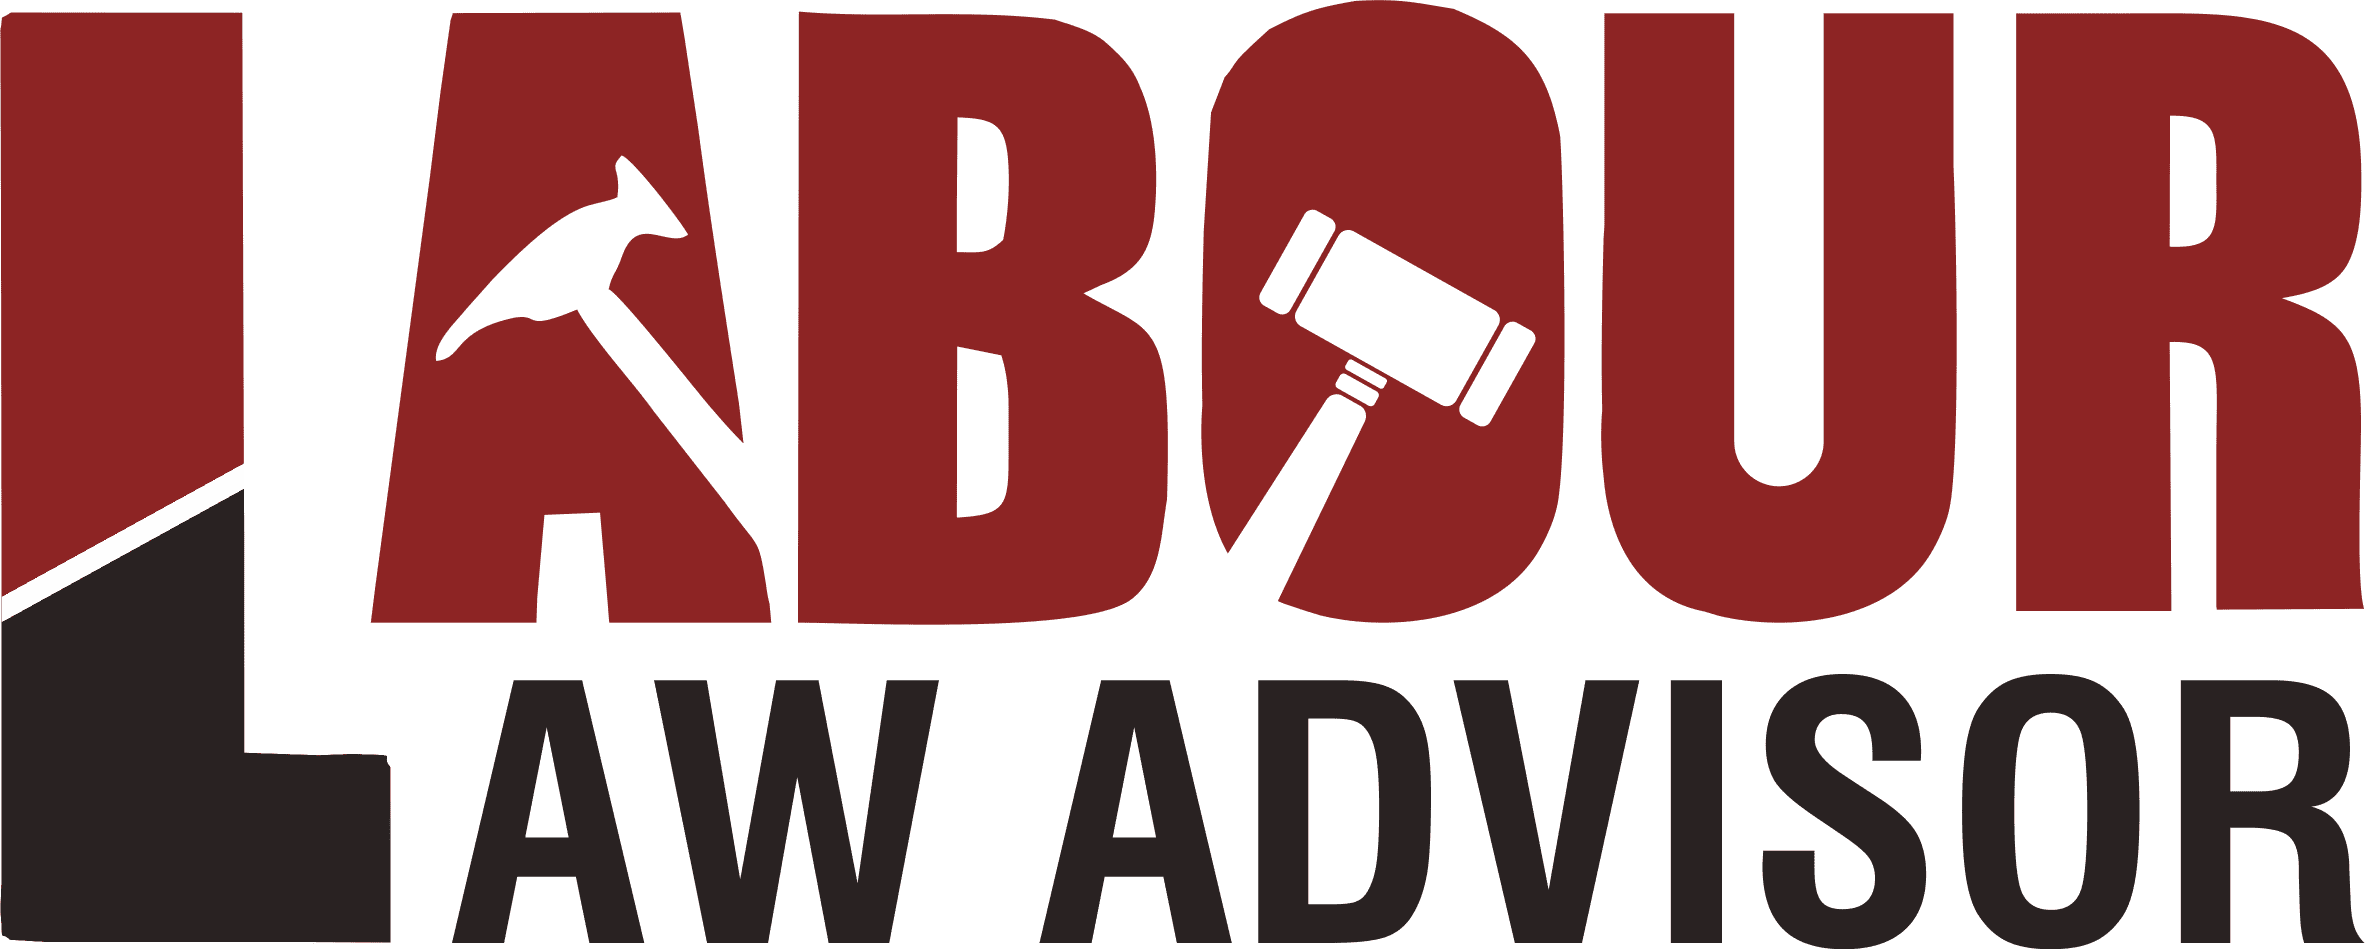 labourlawadvisor Logo